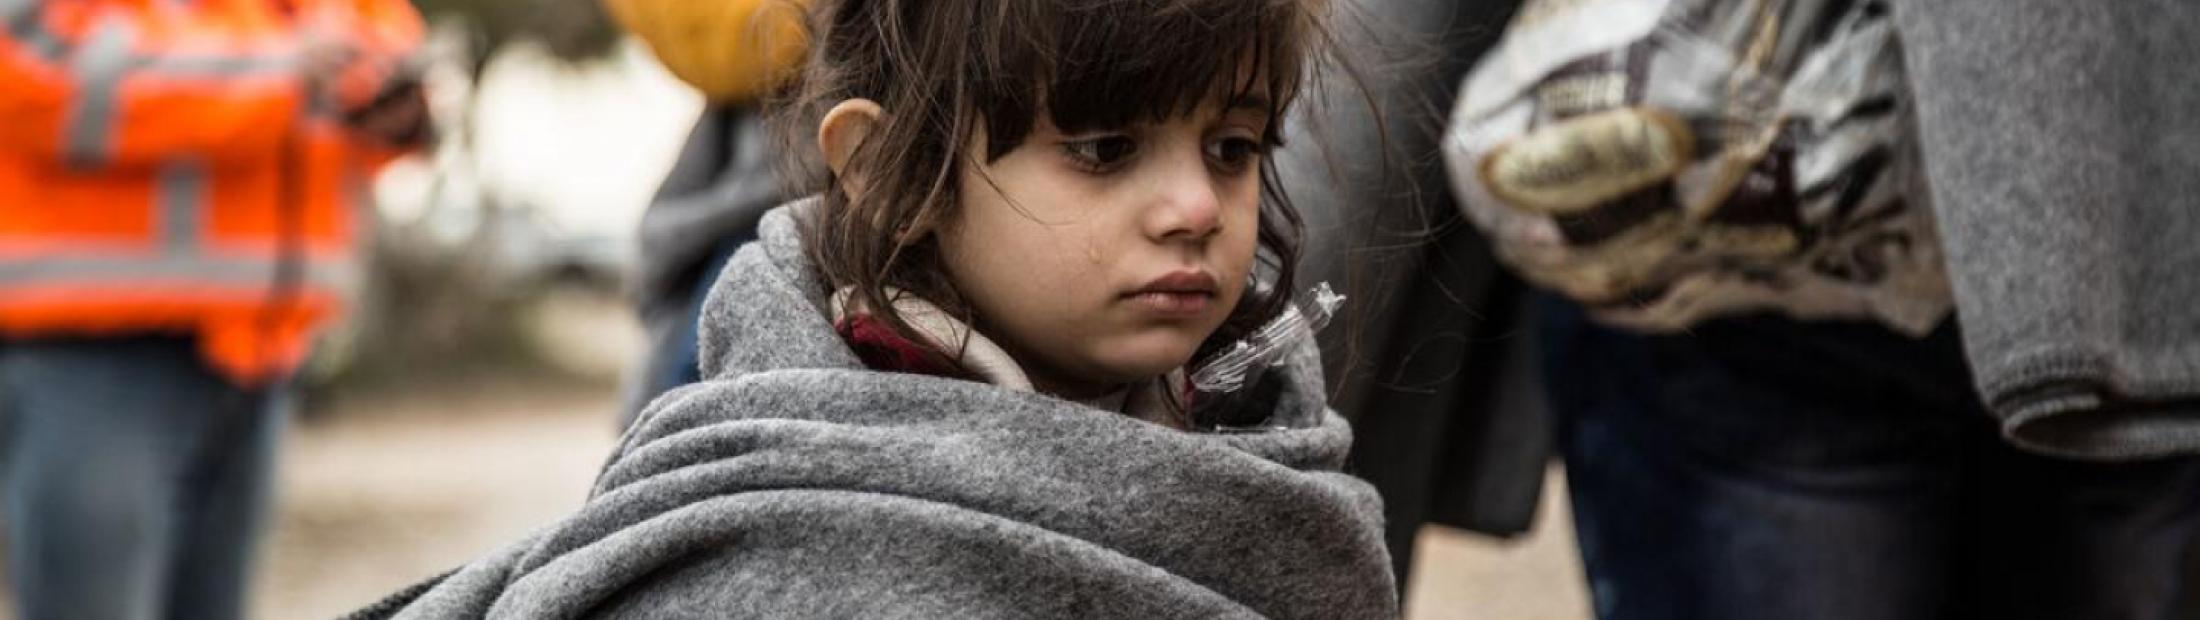 Aylan Kurdi: se cumple 1 año de la tragedia